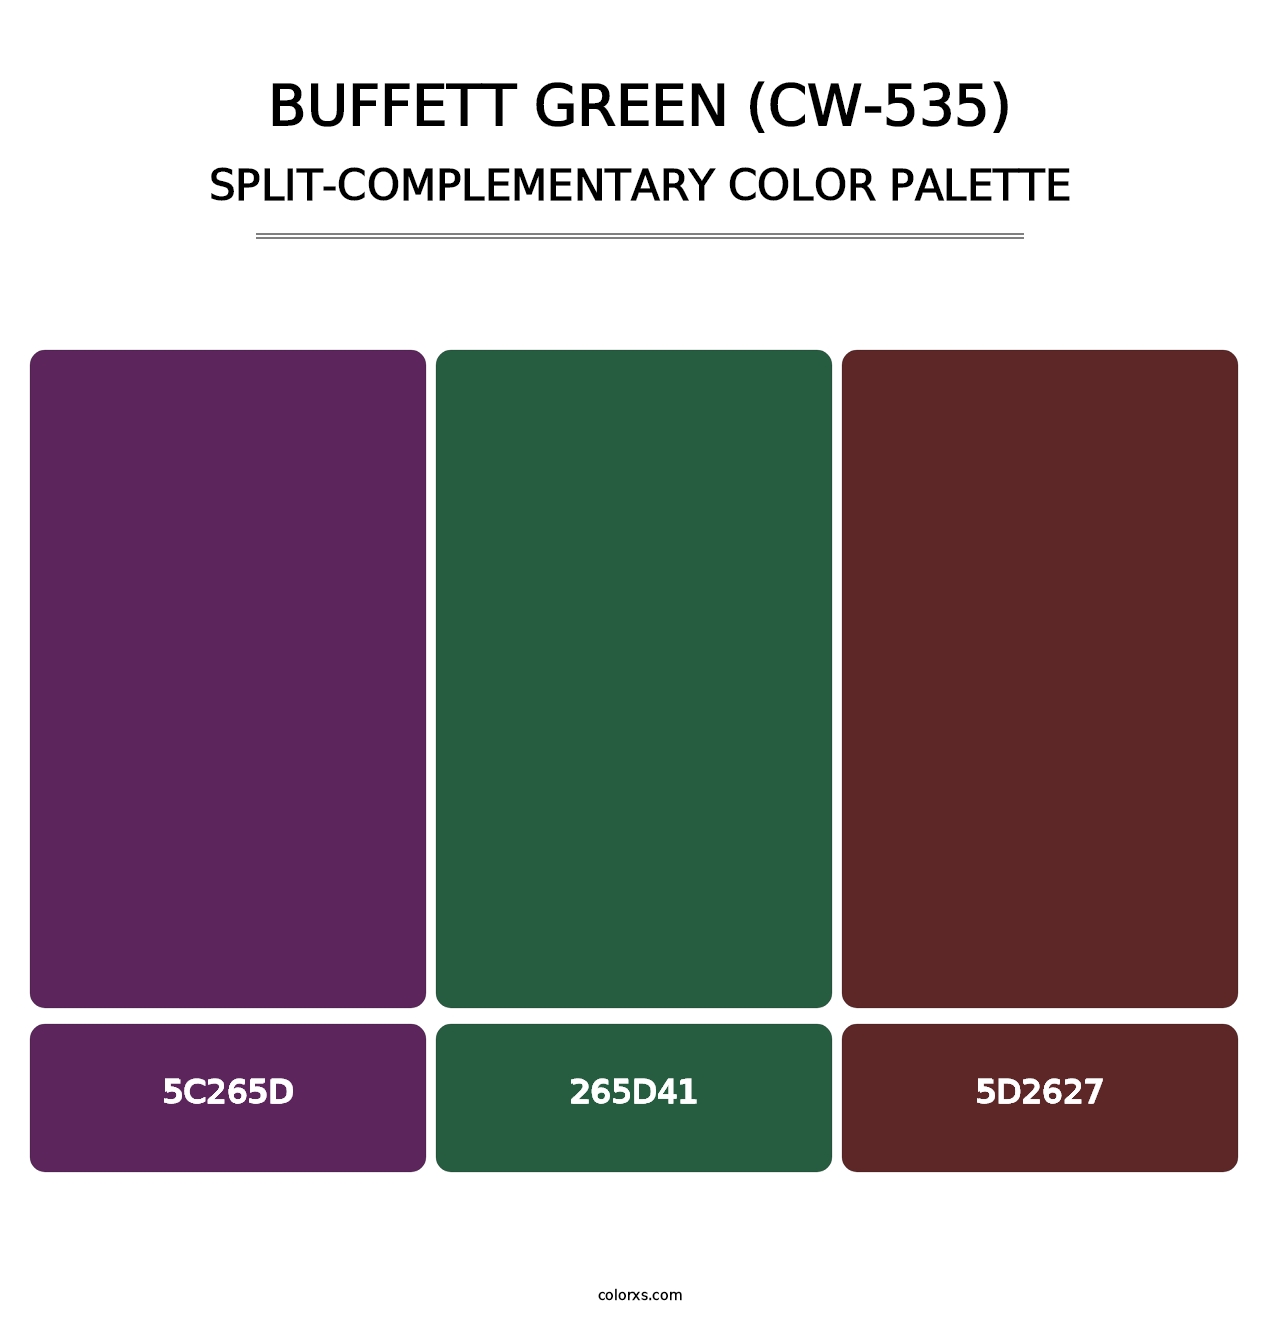 Buffett Green (CW-535) - Split-Complementary Color Palette